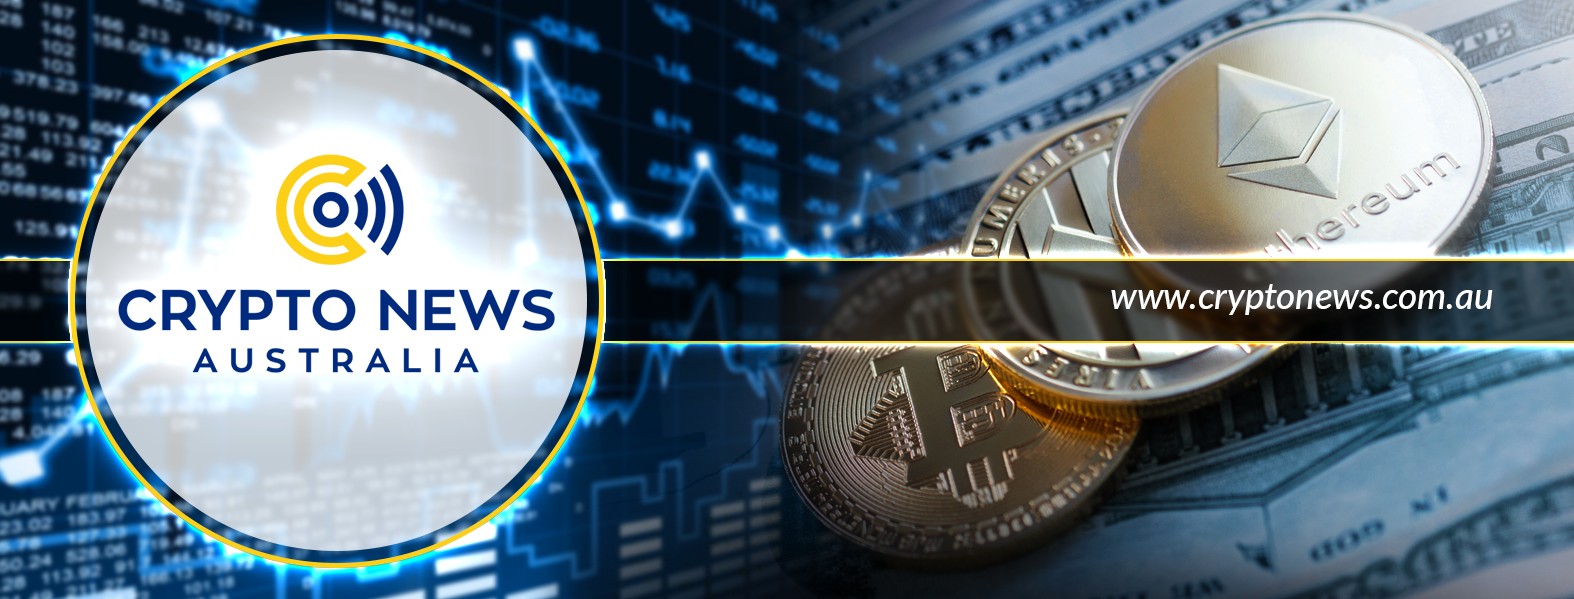 Crypto com news today 1 bit bitcoin value